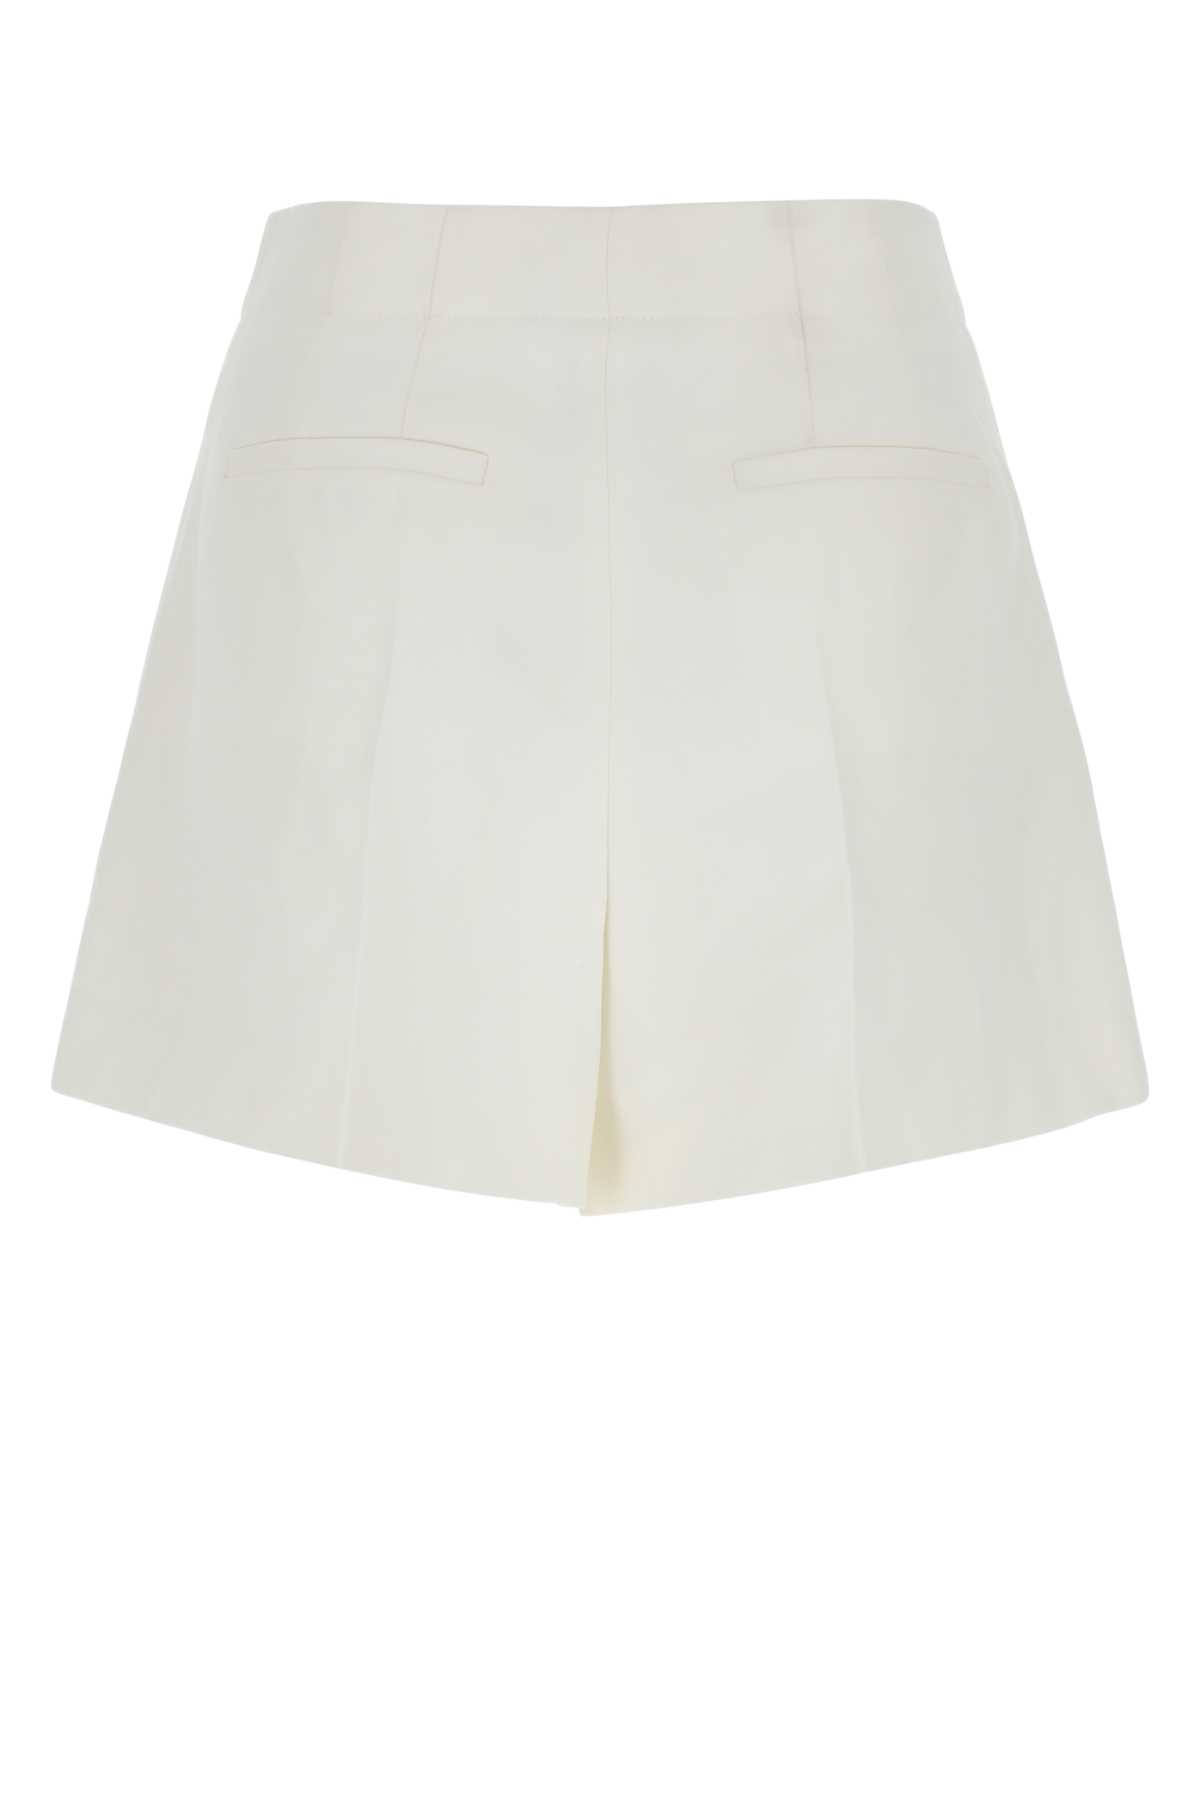 Chloé White Wool Blend Shorts In 107